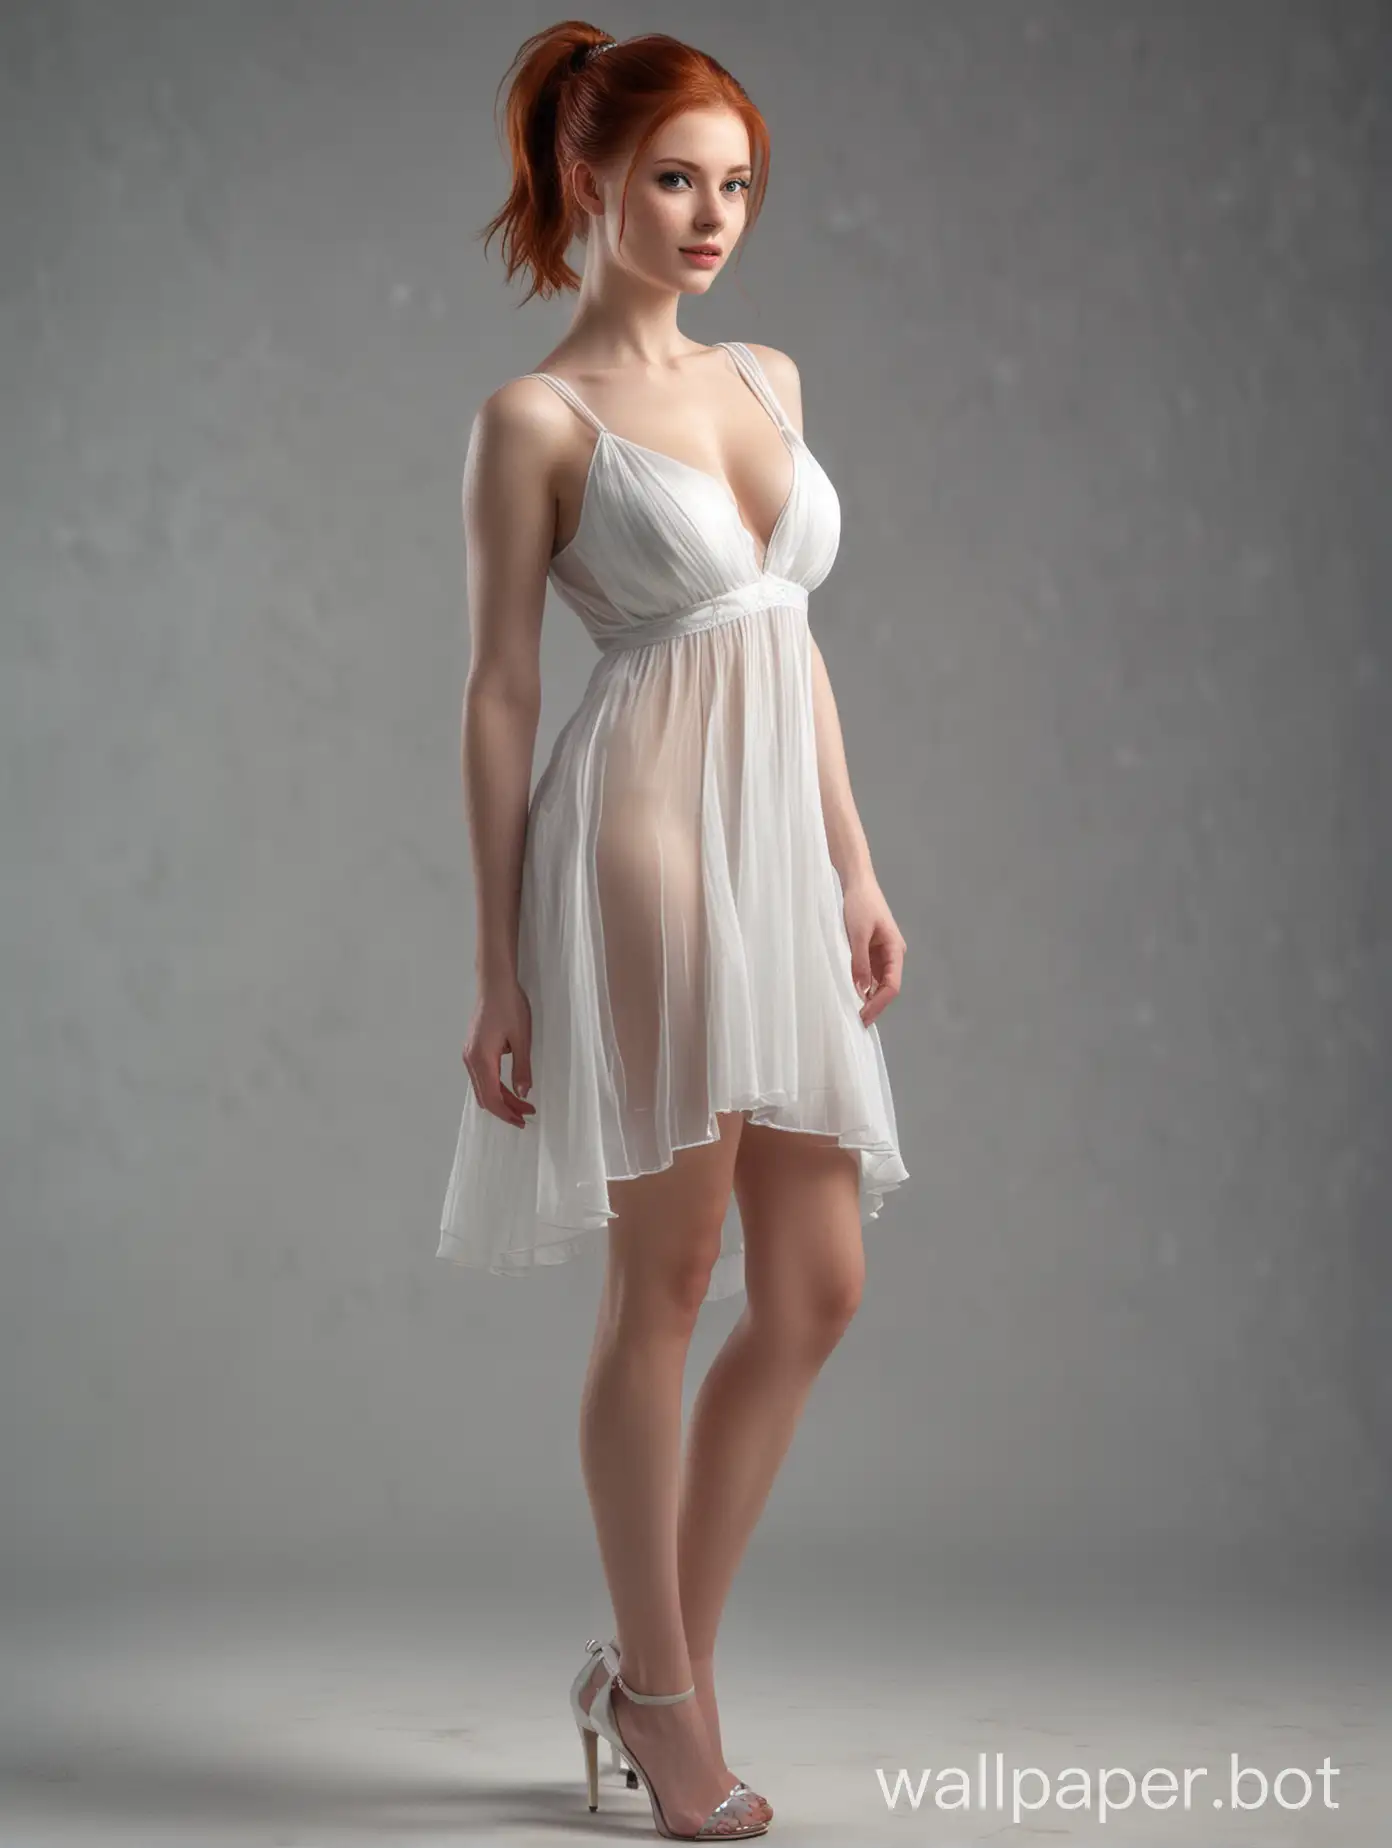 Elegant-Redhead-Model-in-Sheer-White-Dress-and-High-Heels